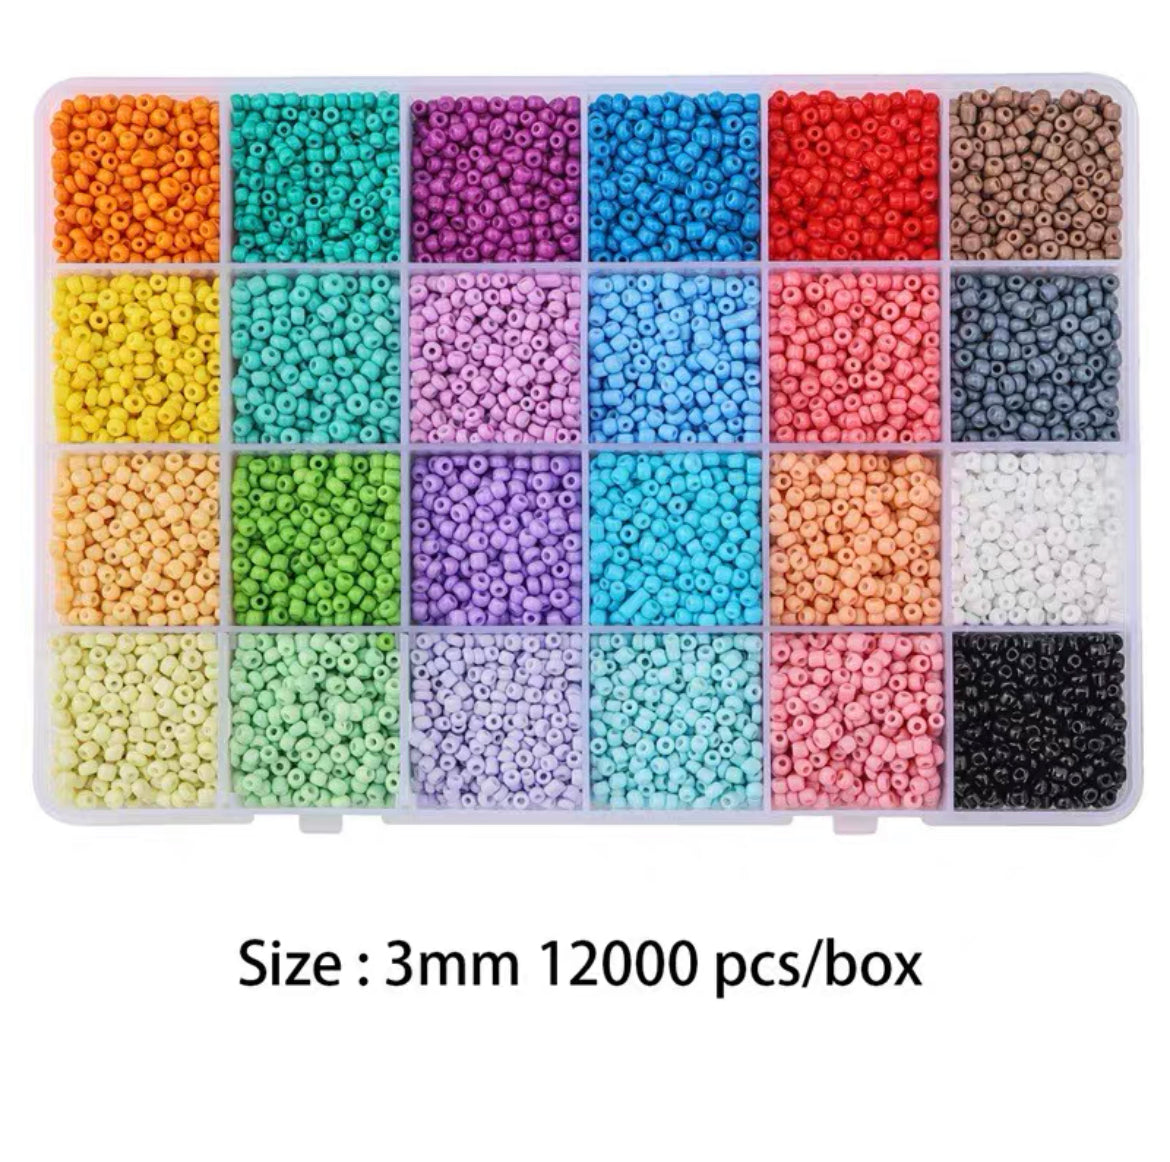 DIY Bead Kit - 3mm 24 Colors Beads for Handmade Jewelry & Craft